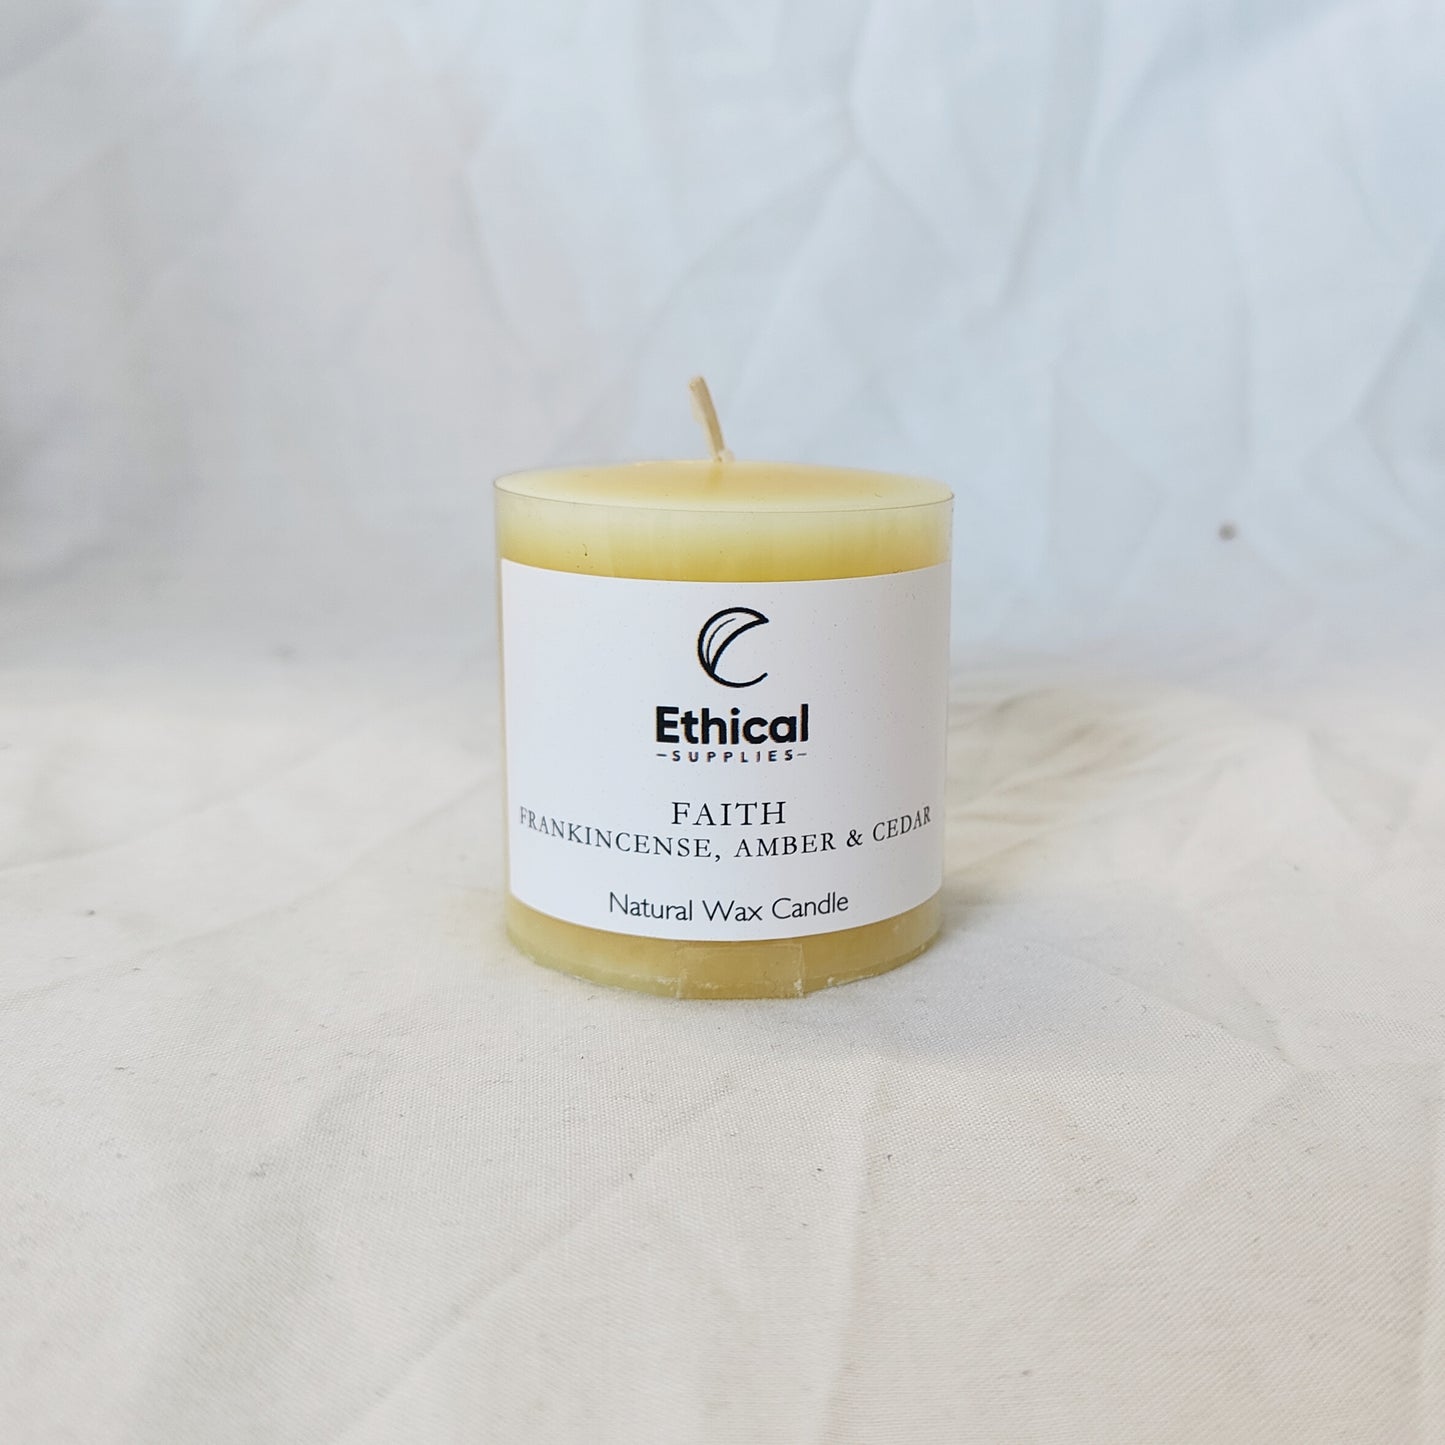 Natural Wax Pillar Candles - Ethical Supplies